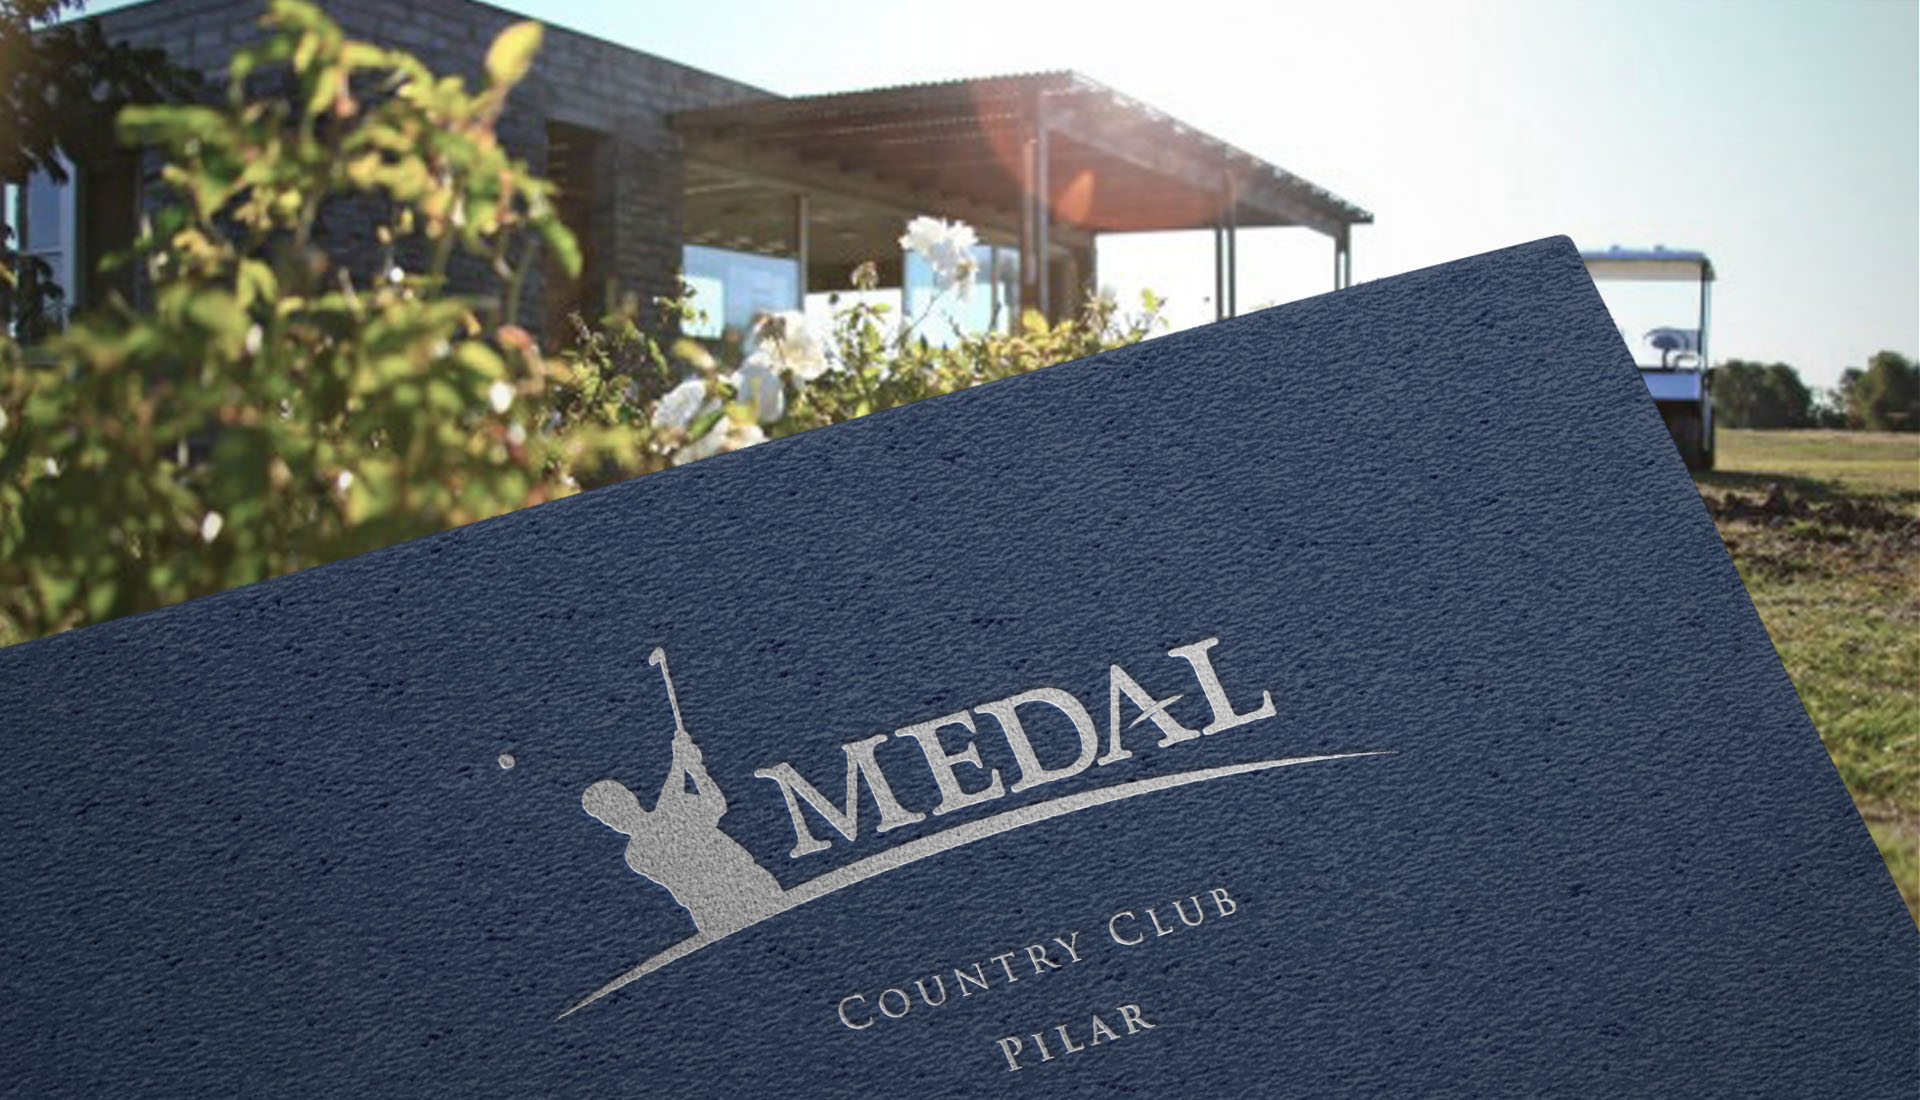 Medal Country Club Pilar